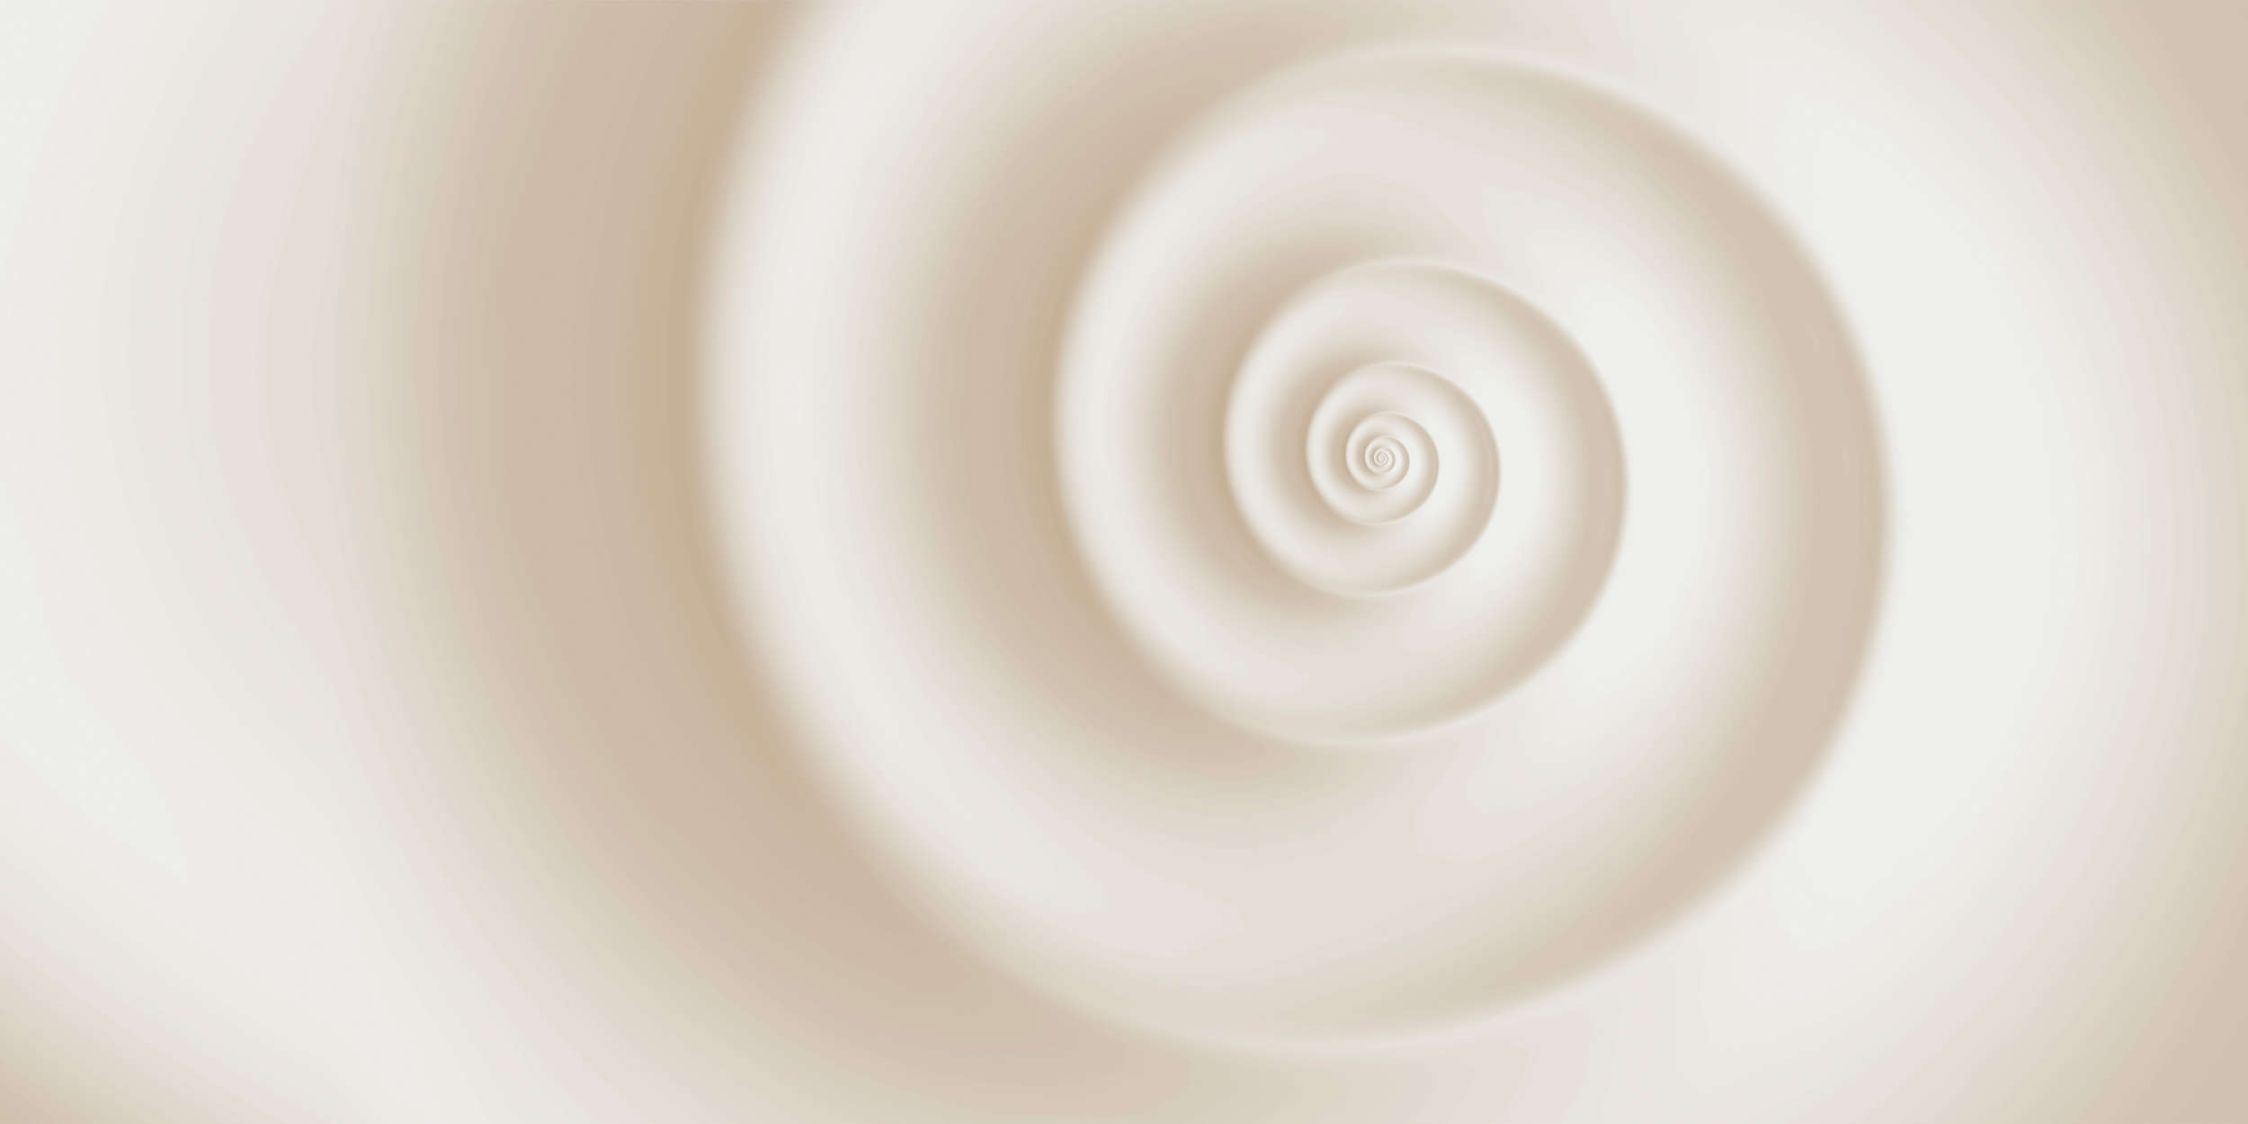             Fotomurali »swirl« - Leggero motivo a spirale - Materiali non tessuto leggermente strutturato
        